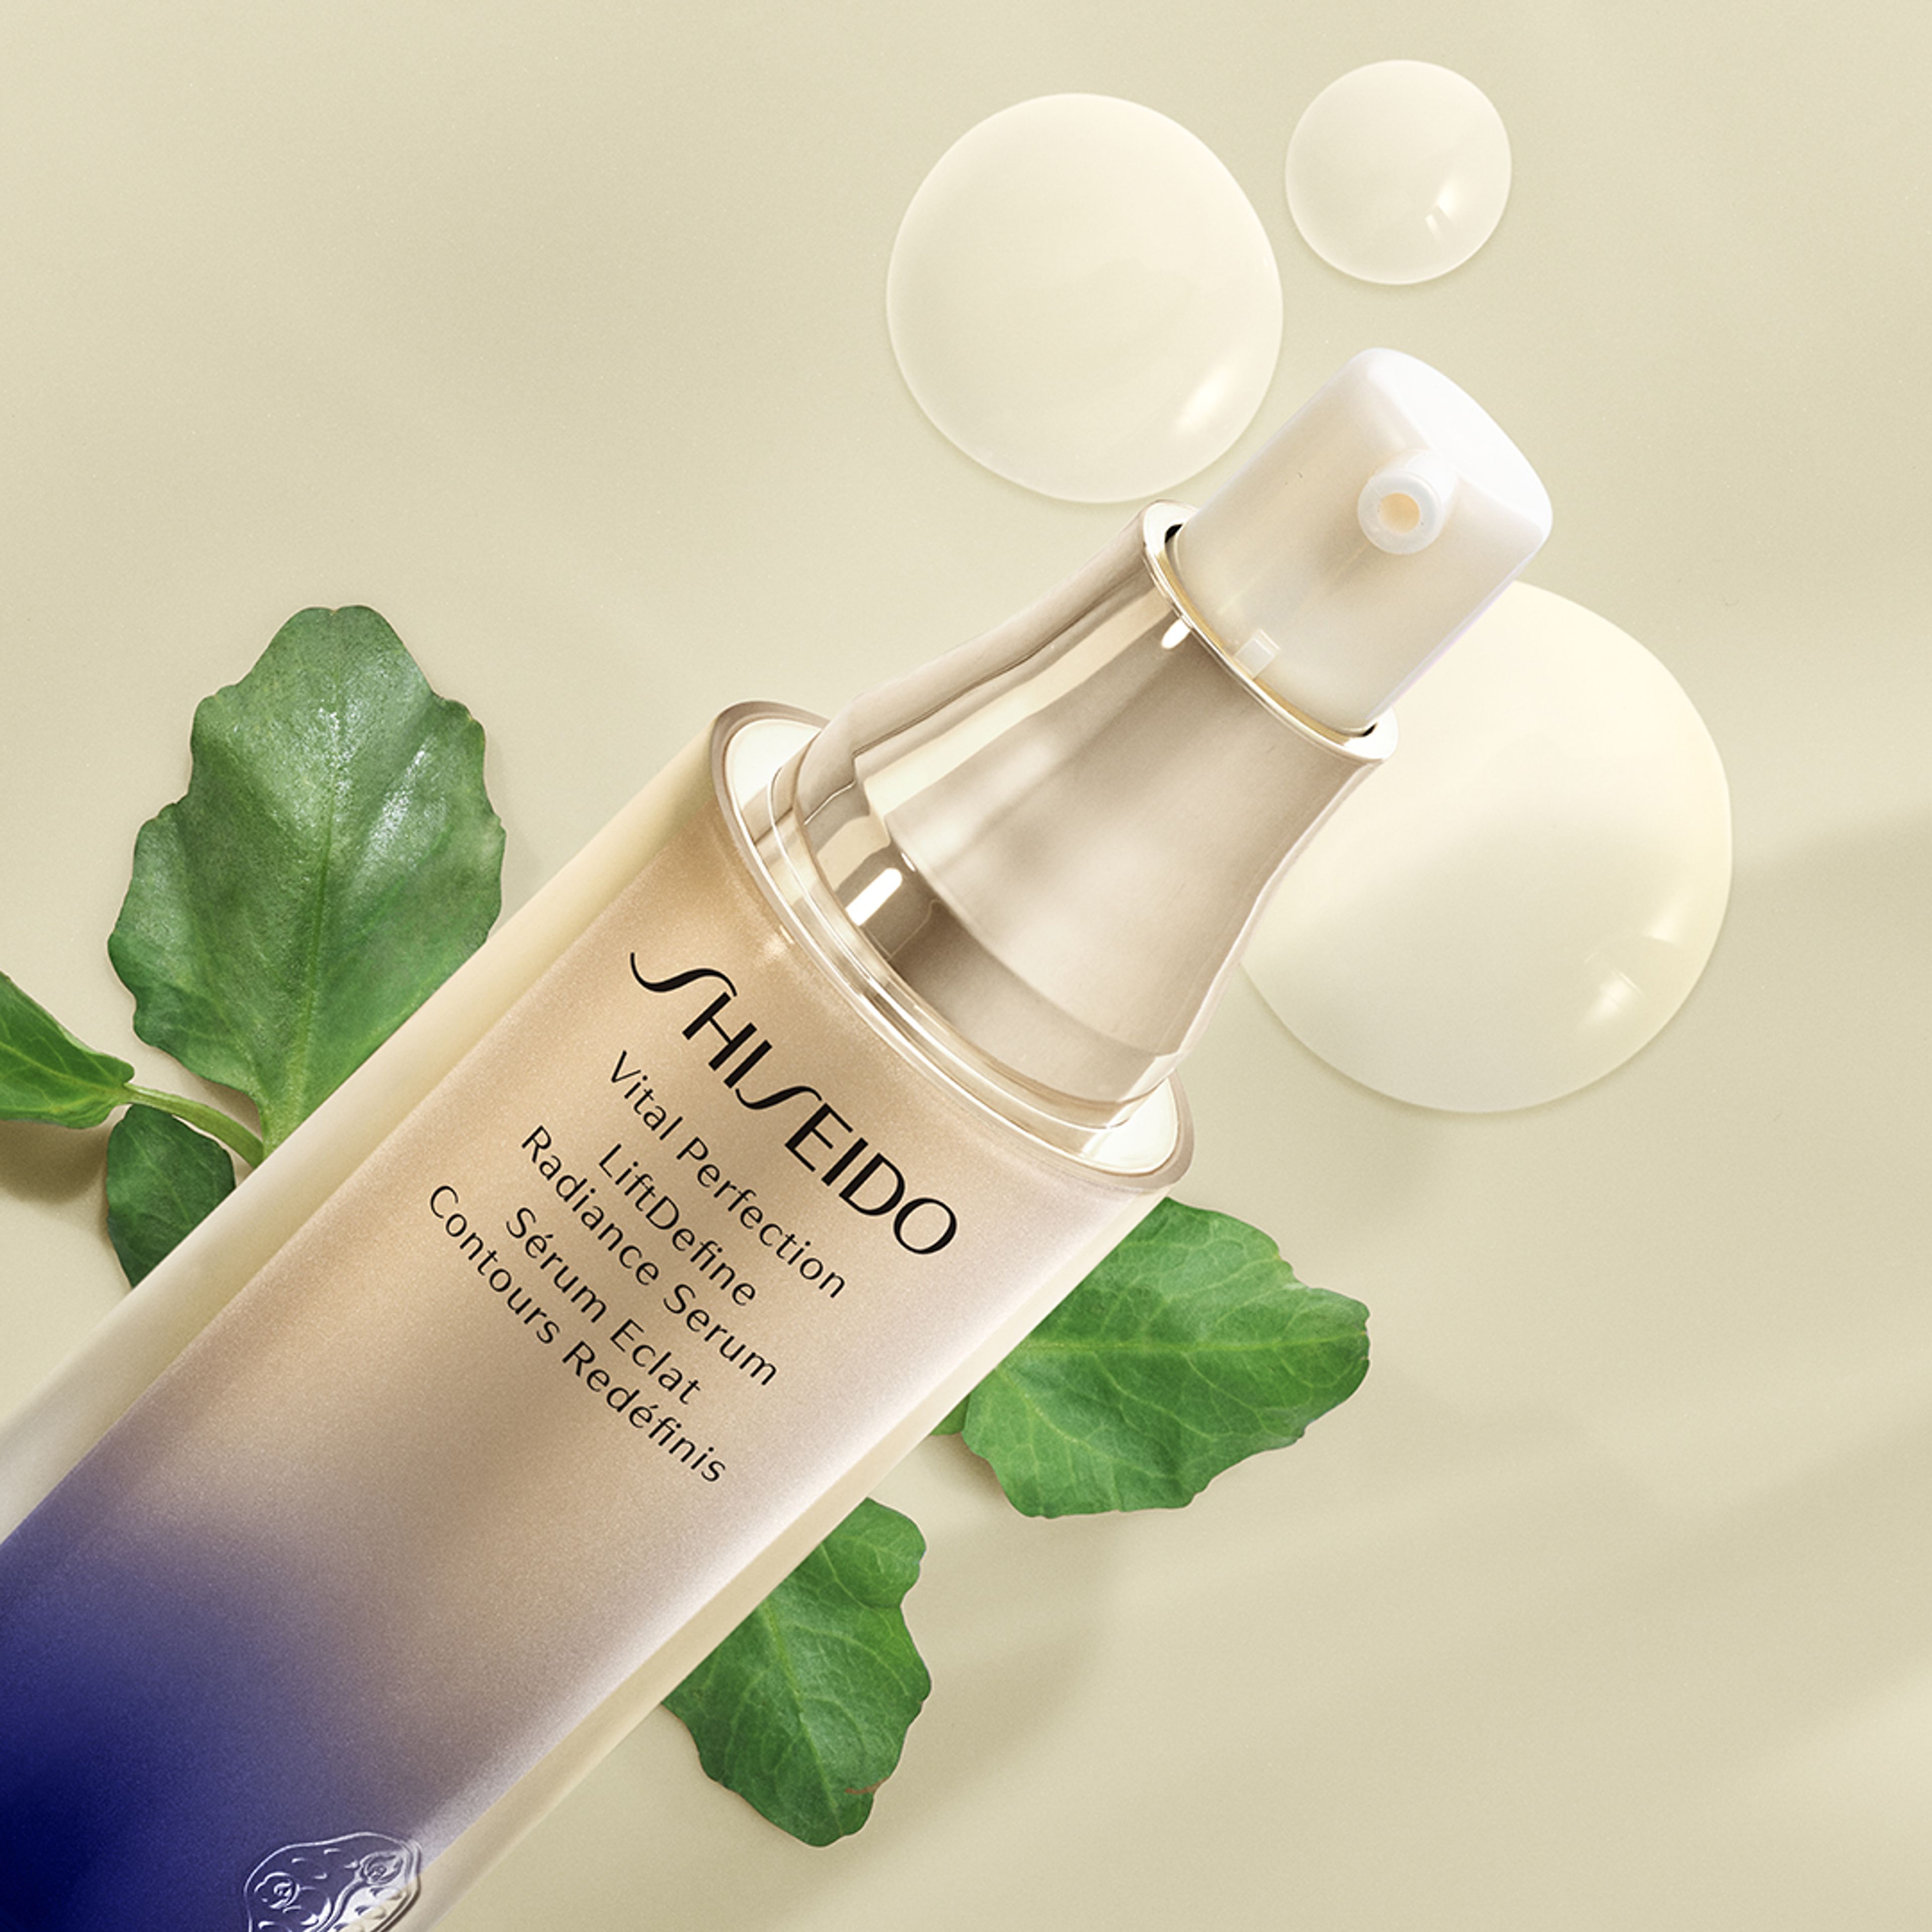 Liftdefine Radiance Serum Shiseido 2